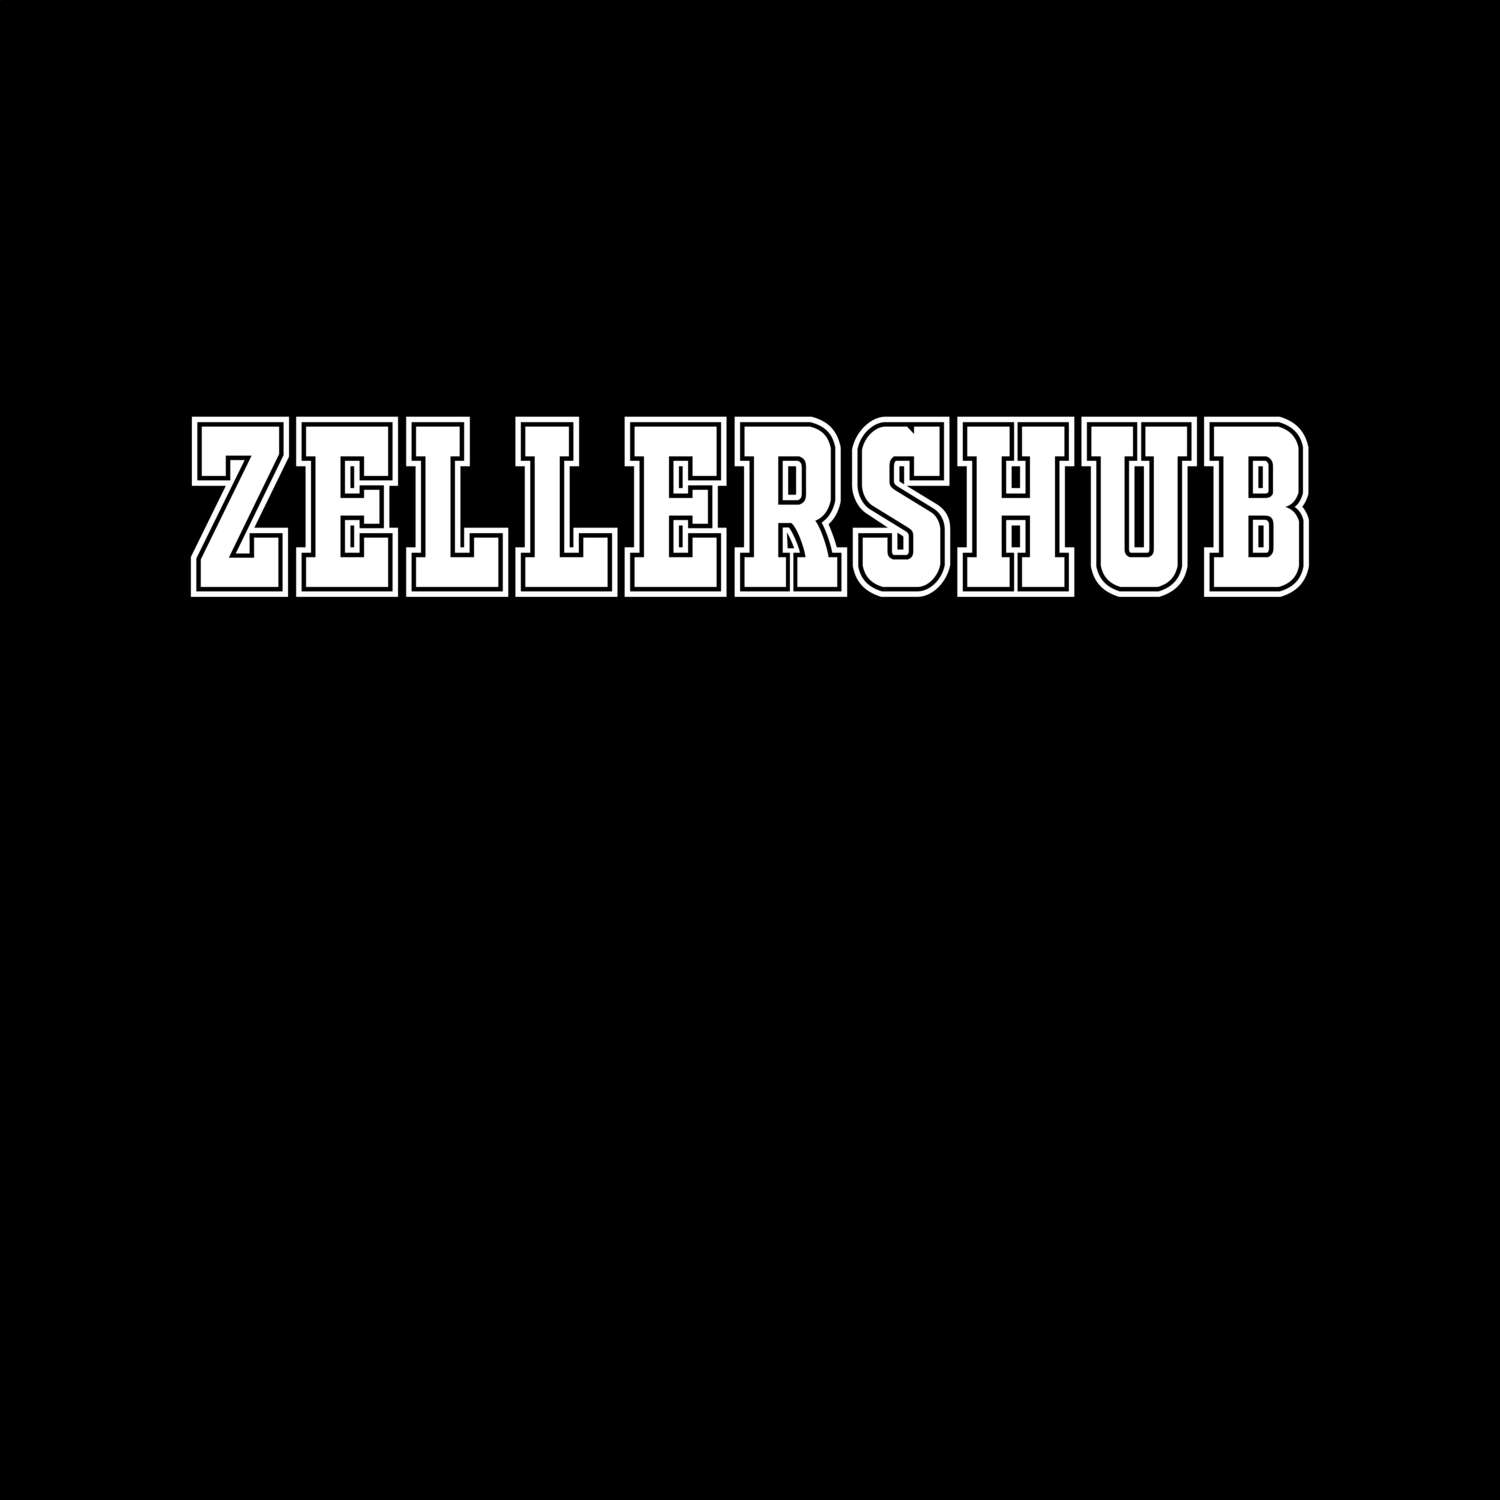 Zellershub T-Shirt »Classic«